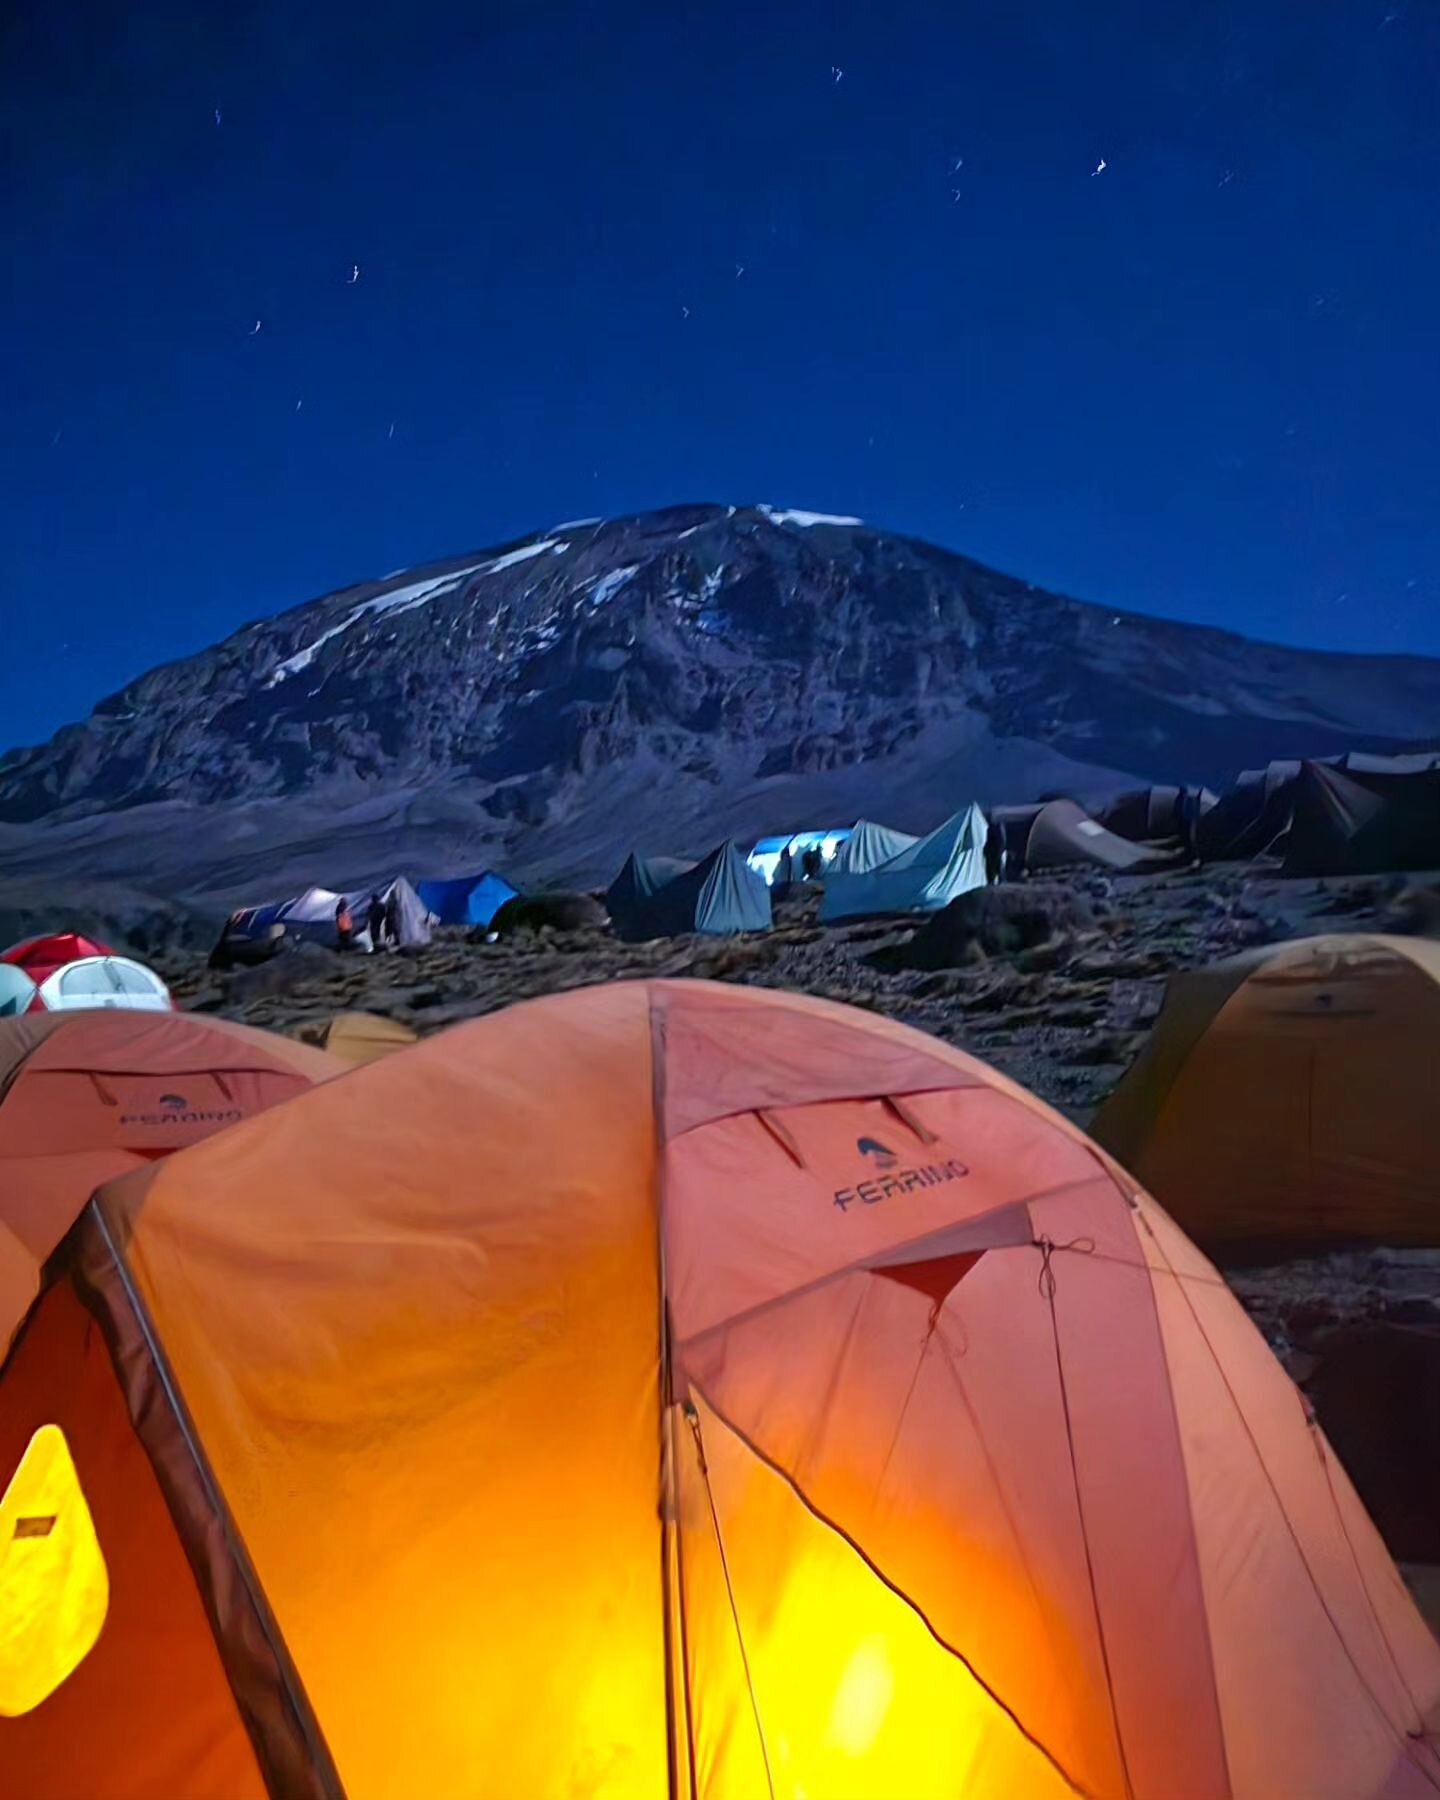 🌌🏔🏕 A starry night on Mt. Kilimanjaro from Karanga Camp just under Uhuru Peak. 
Unreal.
.
.
.
.
.
#kilimanjaro #hiking #nature #wonder #camping #summit #tanzania #africa